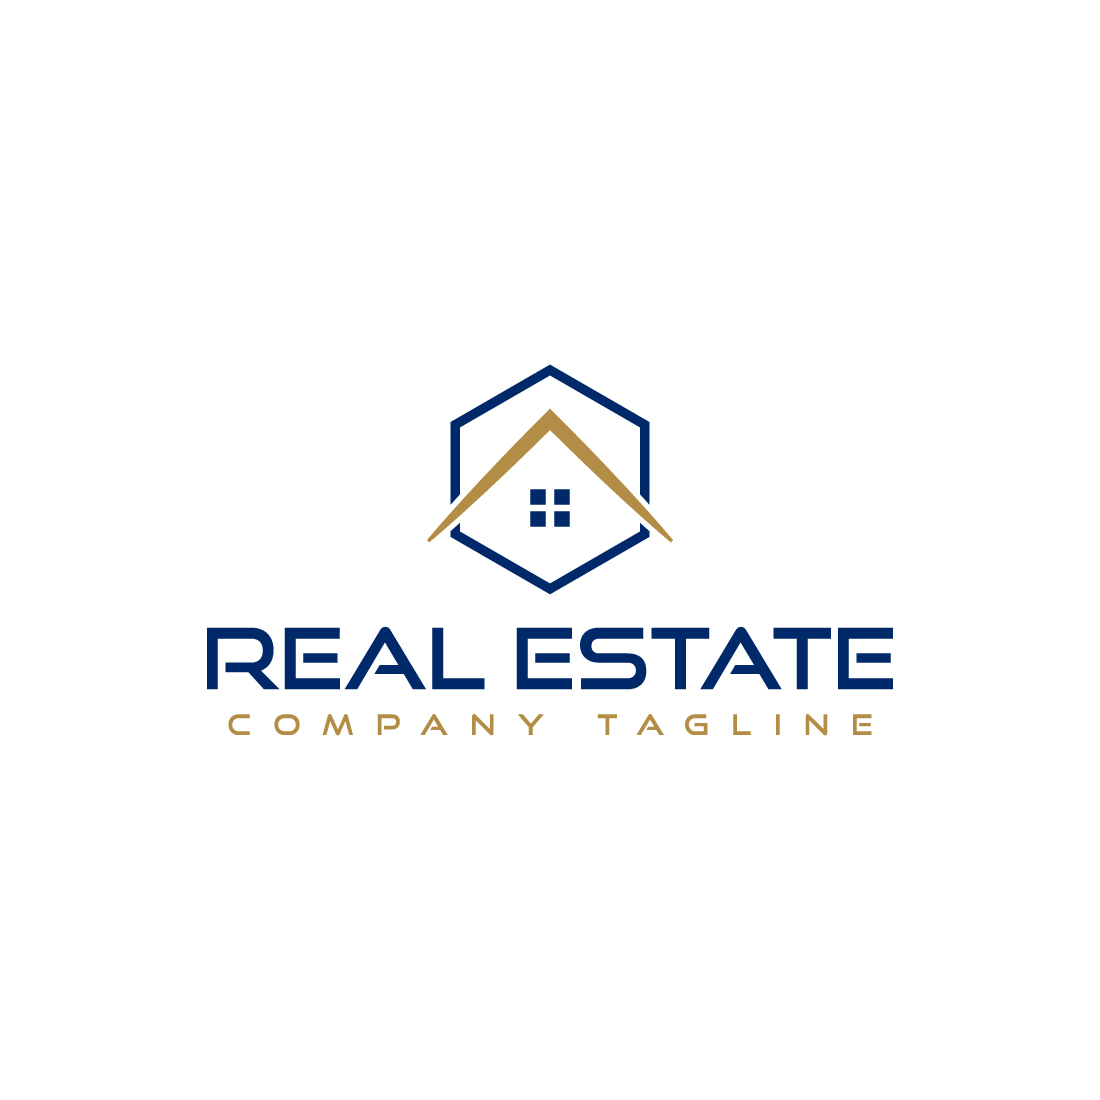 Real estate logo with golden, dark blue color cover image.